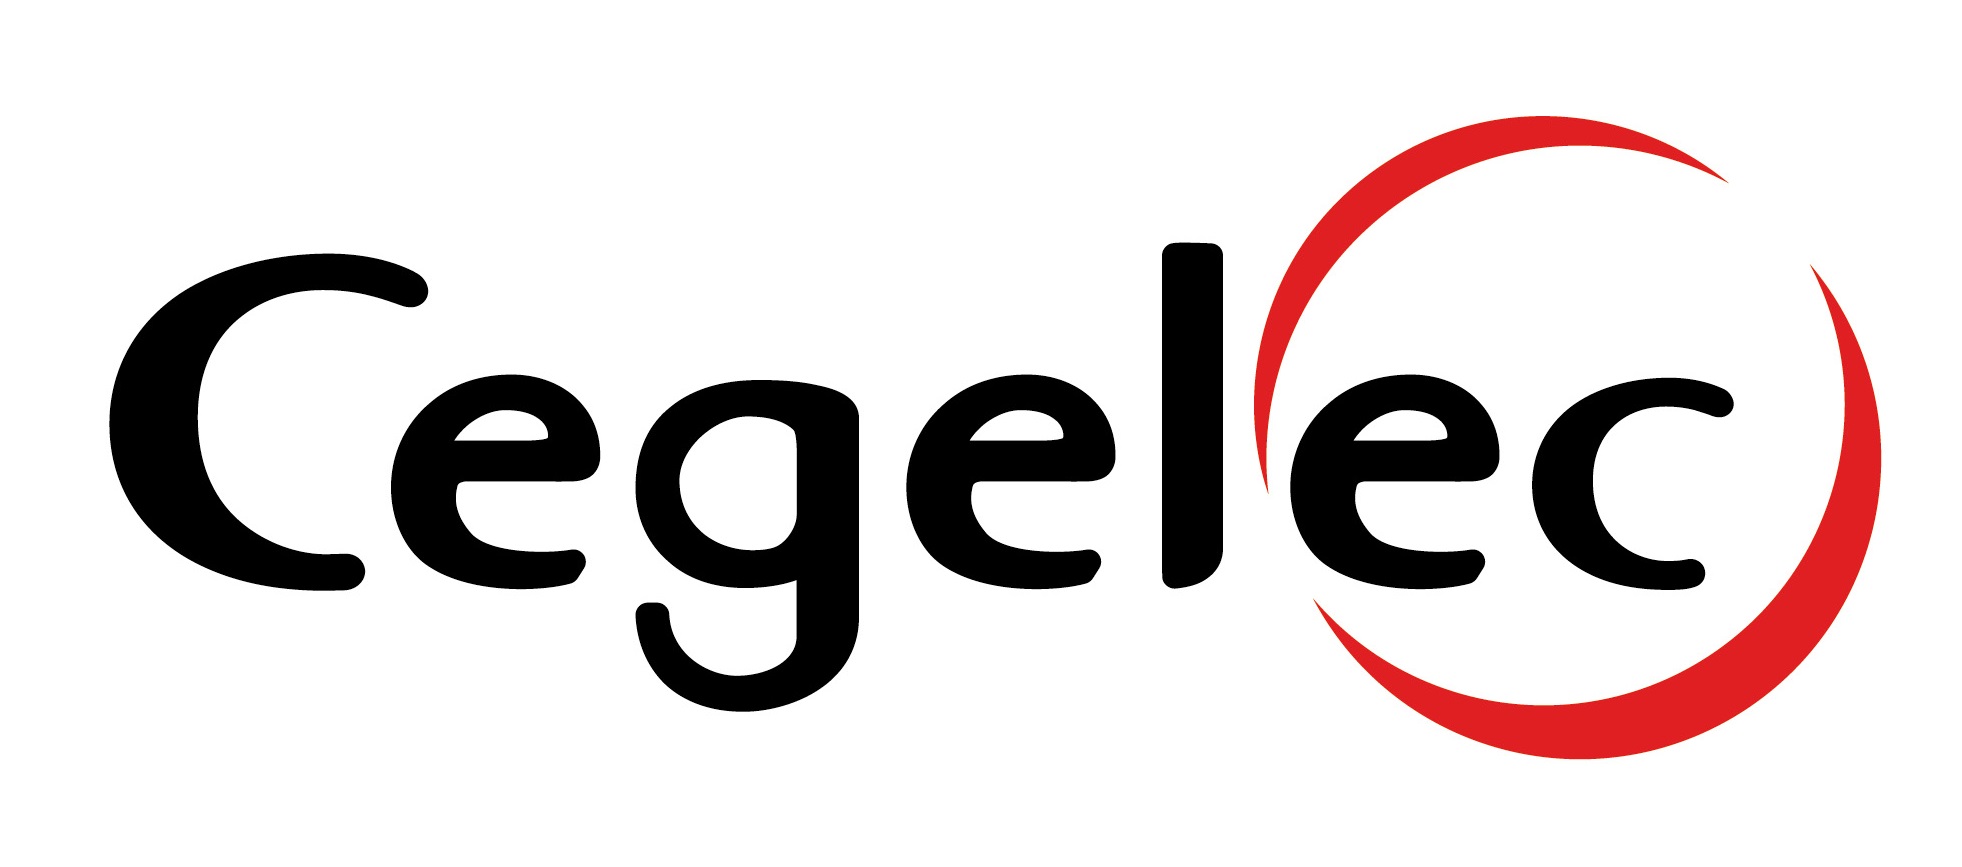 Cegelec Fire Solutions BV